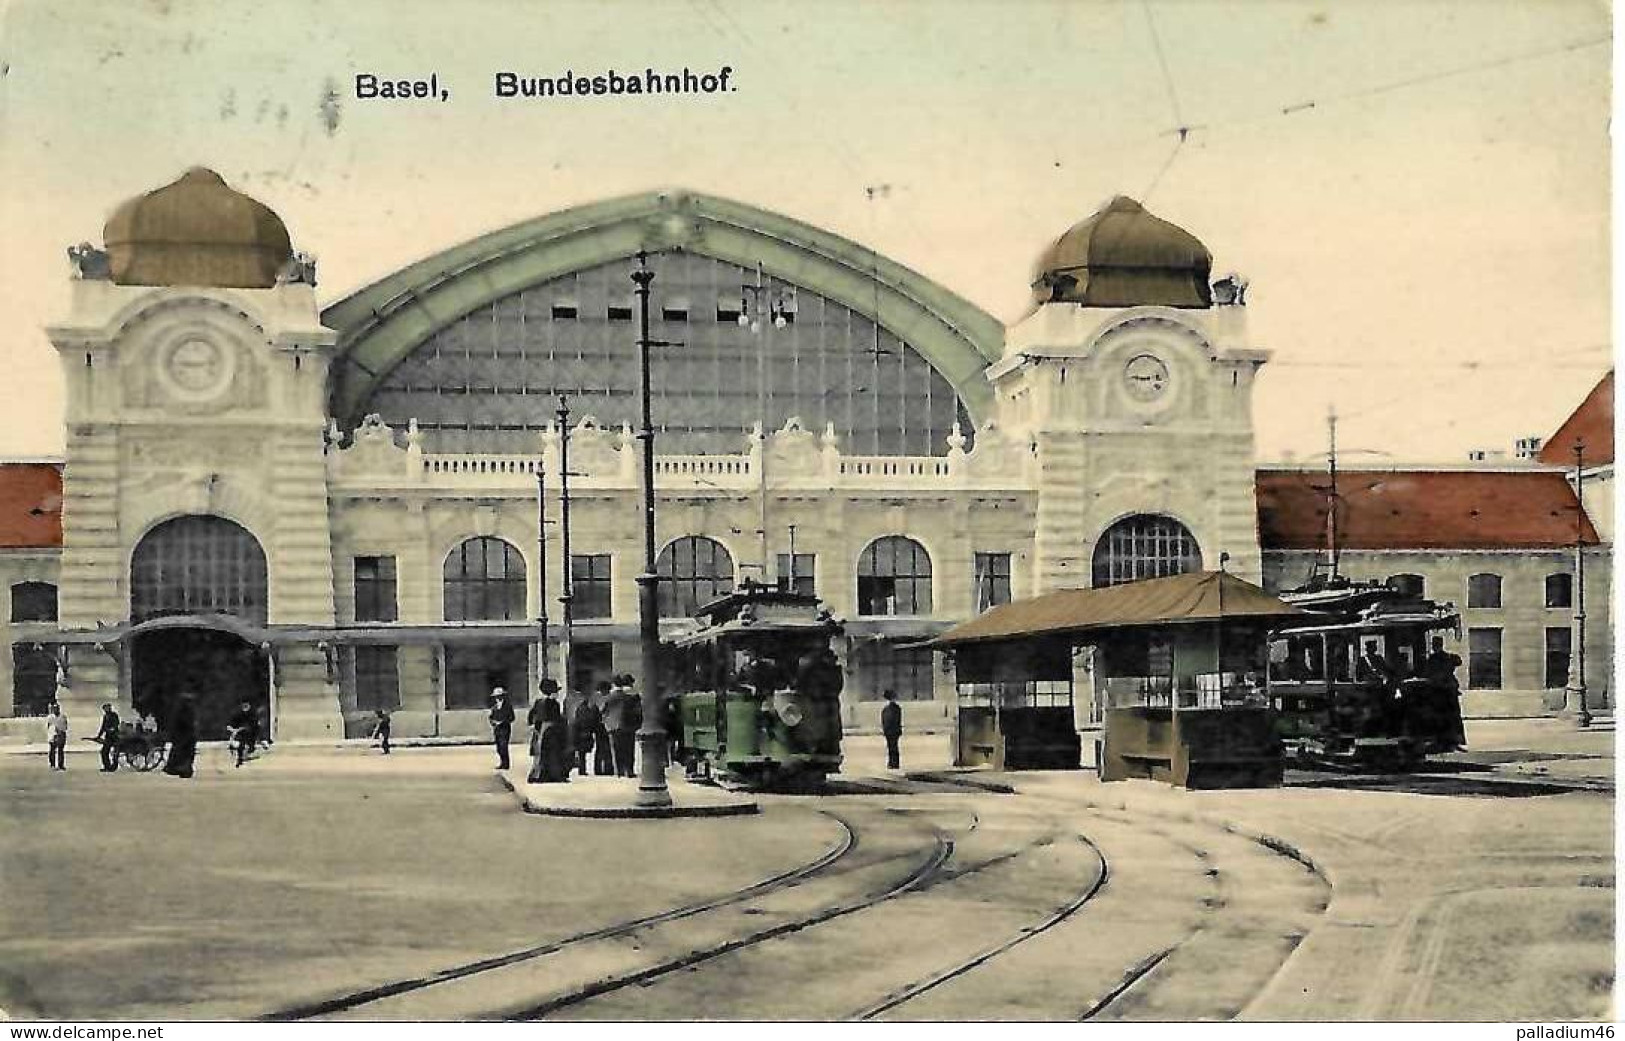 BS BASEL Bundesbahnhof - 16.02.1908 - G. Metz Basel no 26424